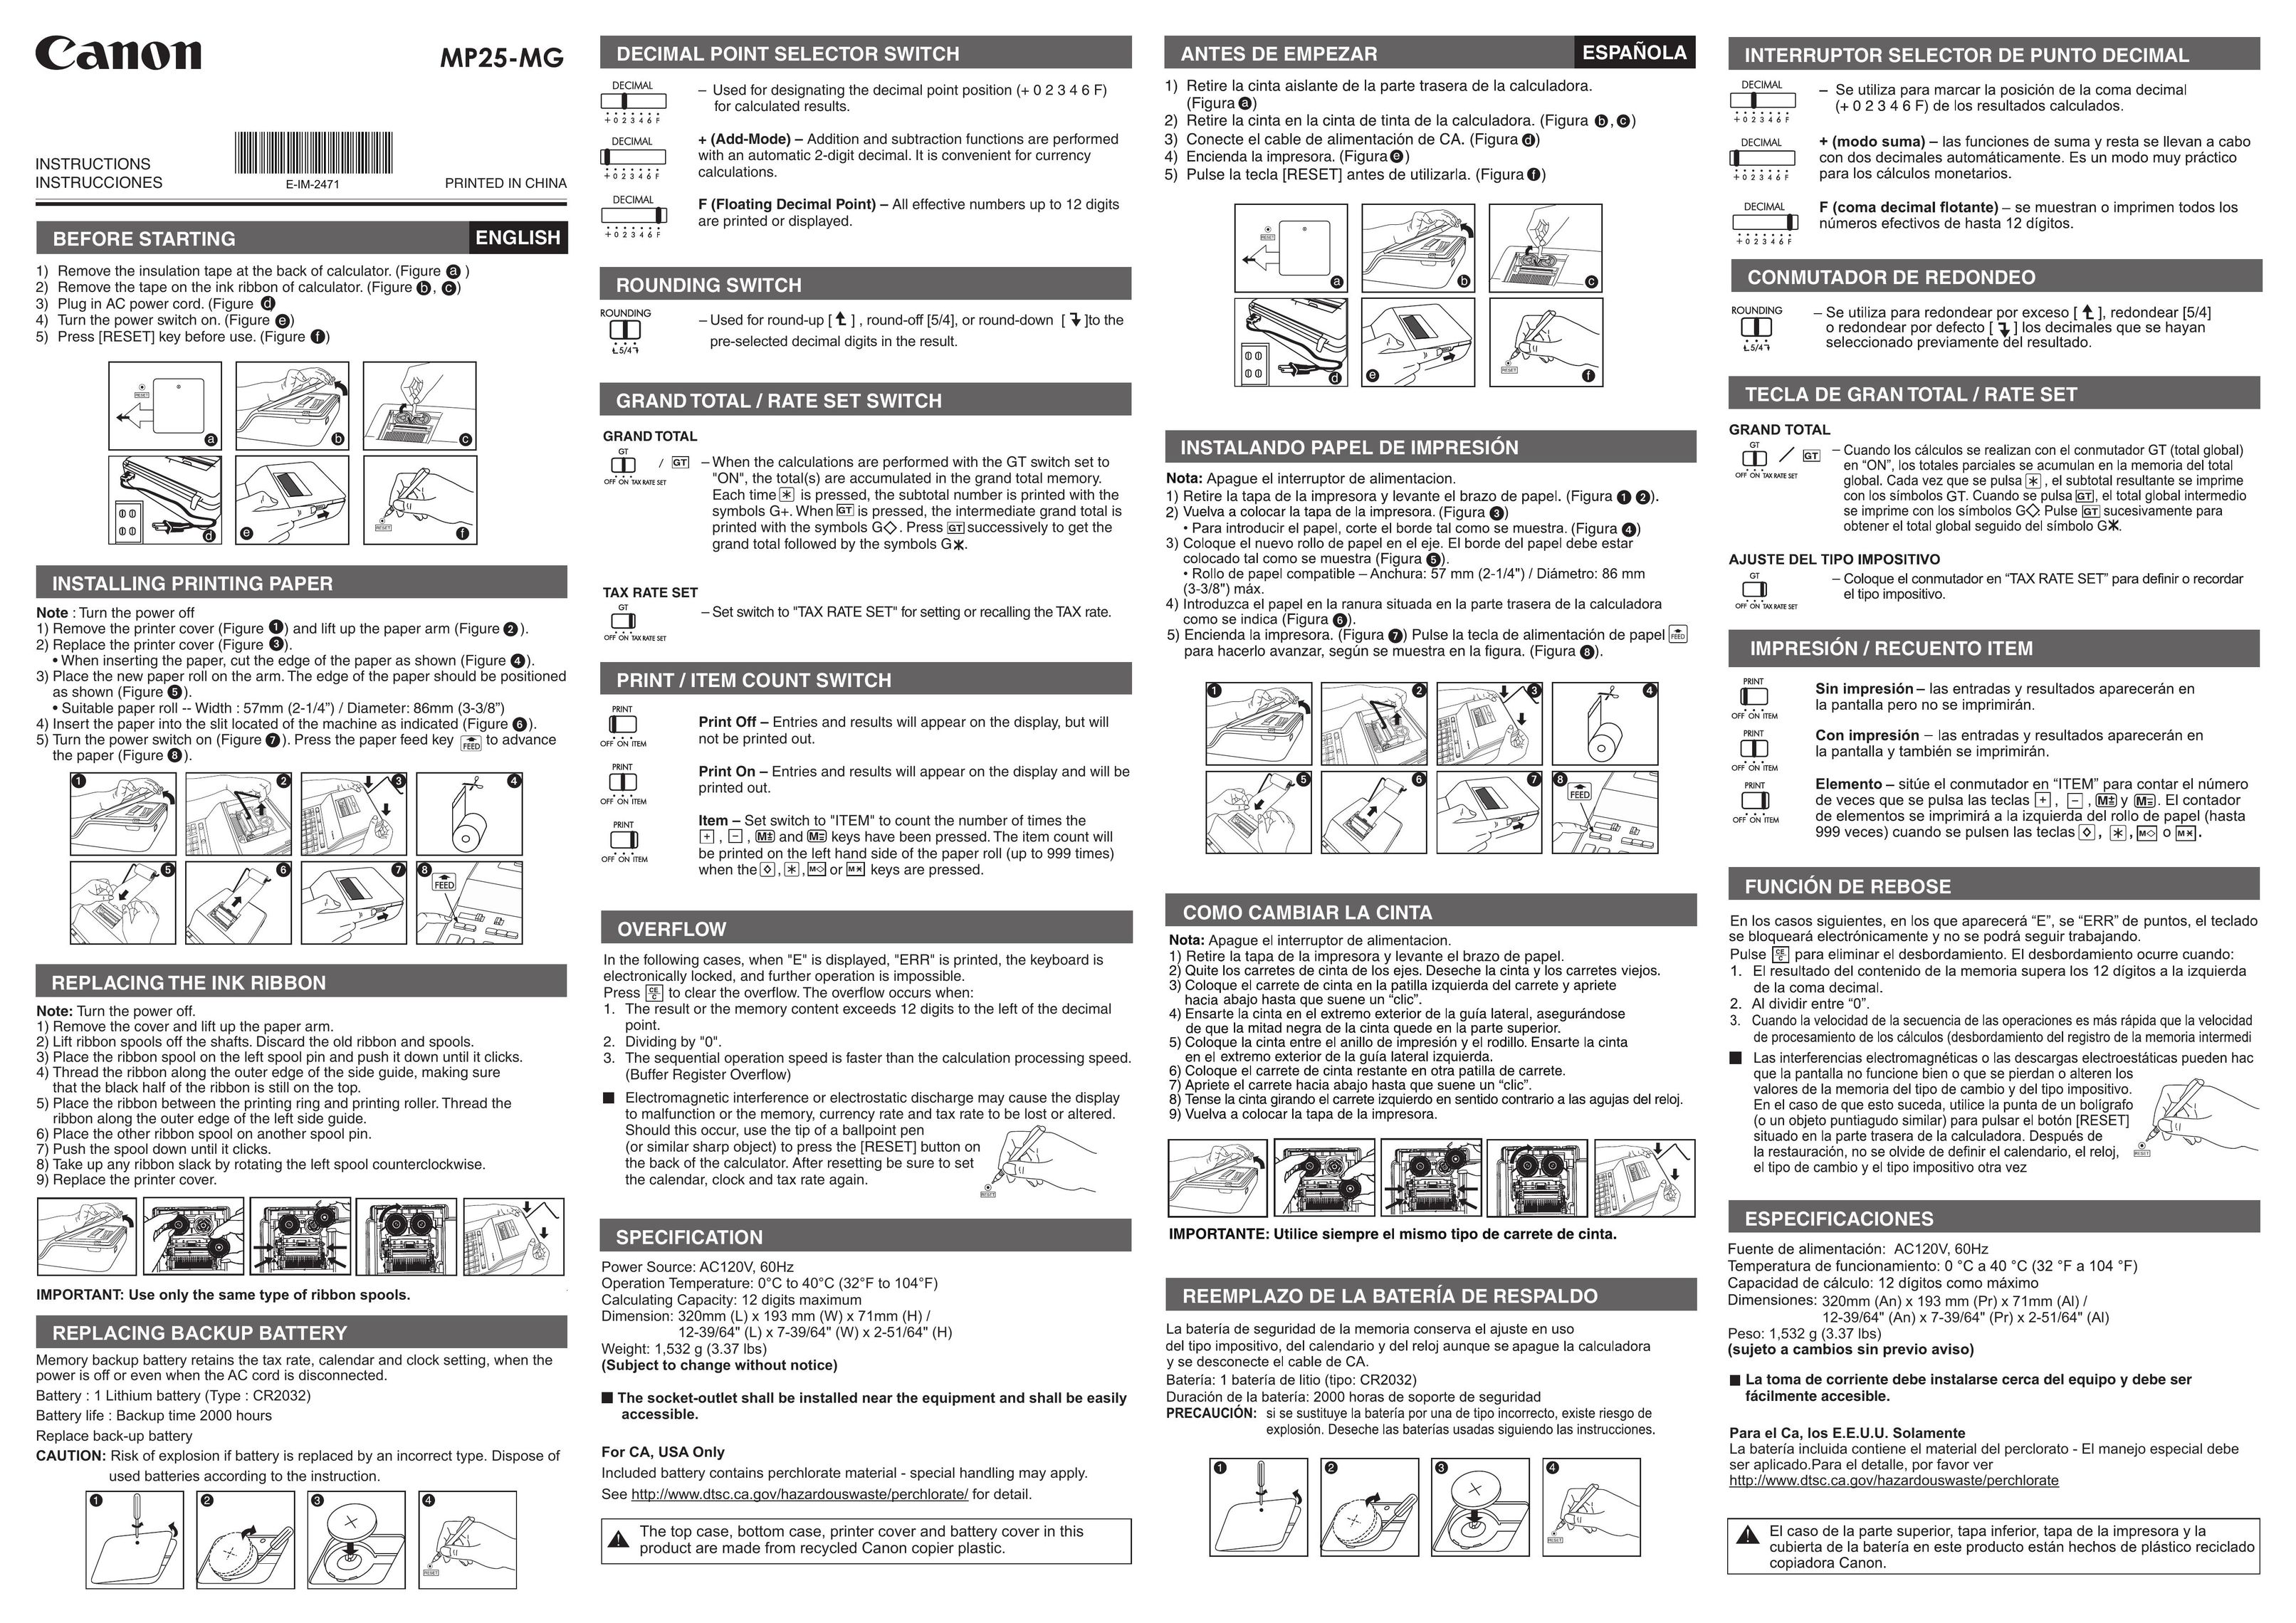 Canon MP25-MG Calculator User Manual